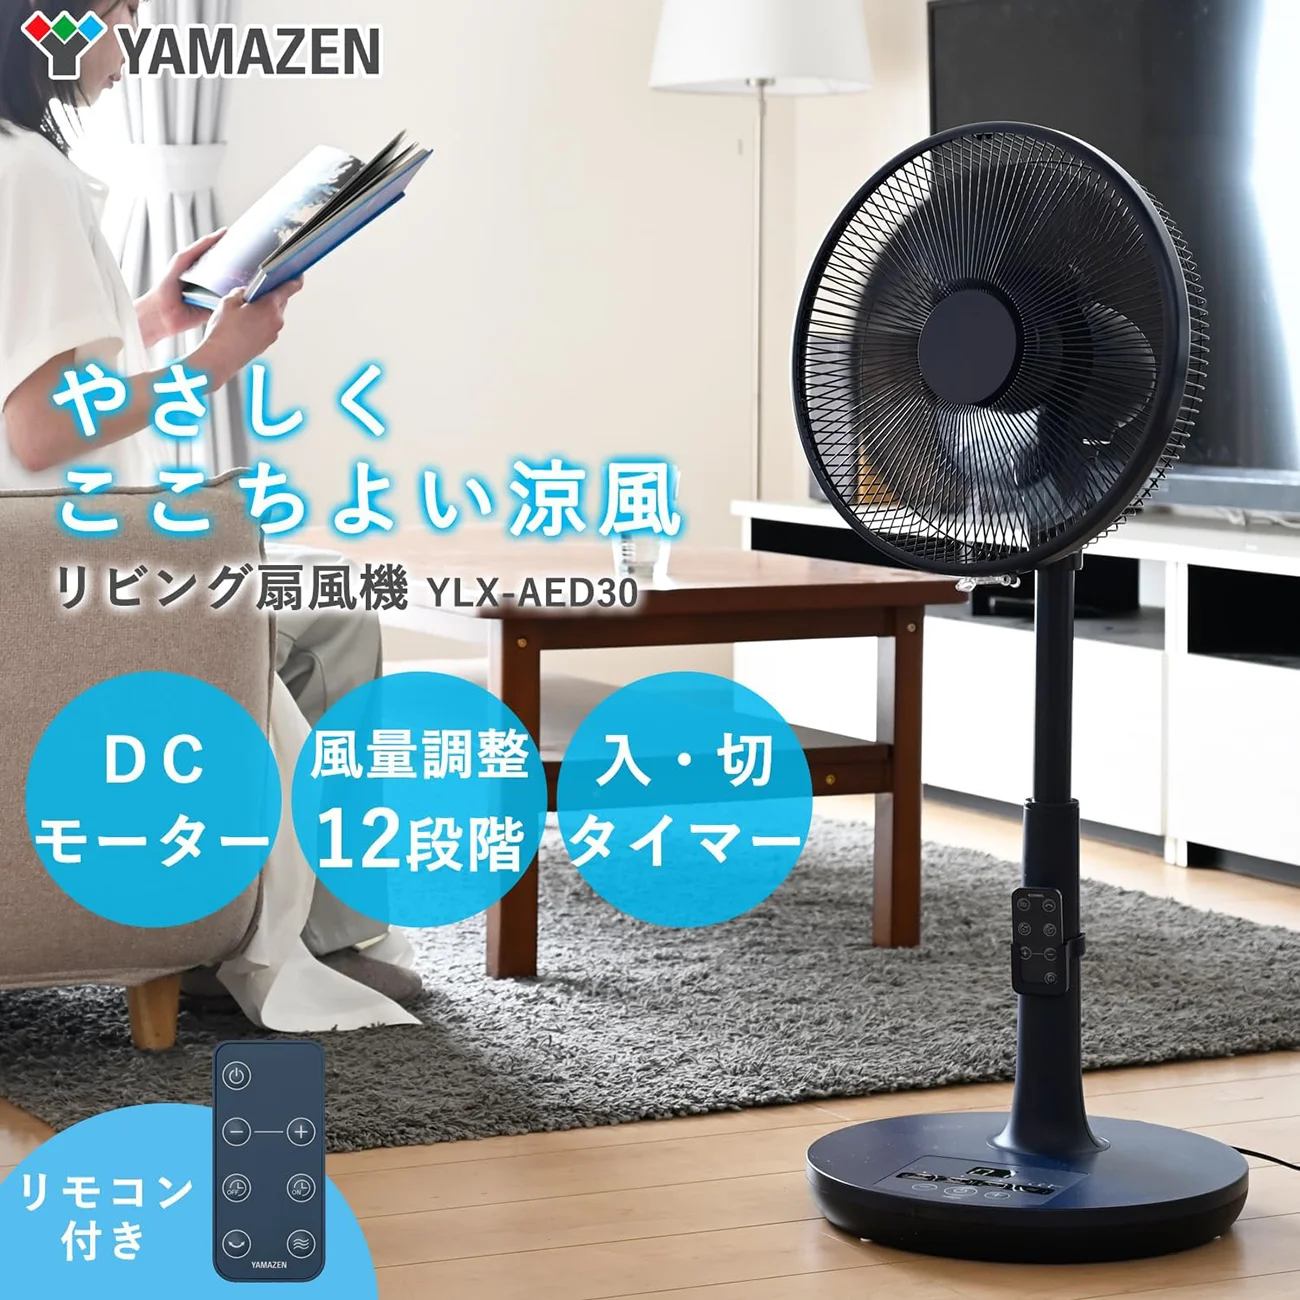  【Amazon.co.jp限定】 [山善] 扇風機 リビング (日本電産製 DCモーター搭載) 静音 リモコン付き 左右自動首振り 風量切替12段階 入切タイマー付 ネイビー YLX-AED30(NV)